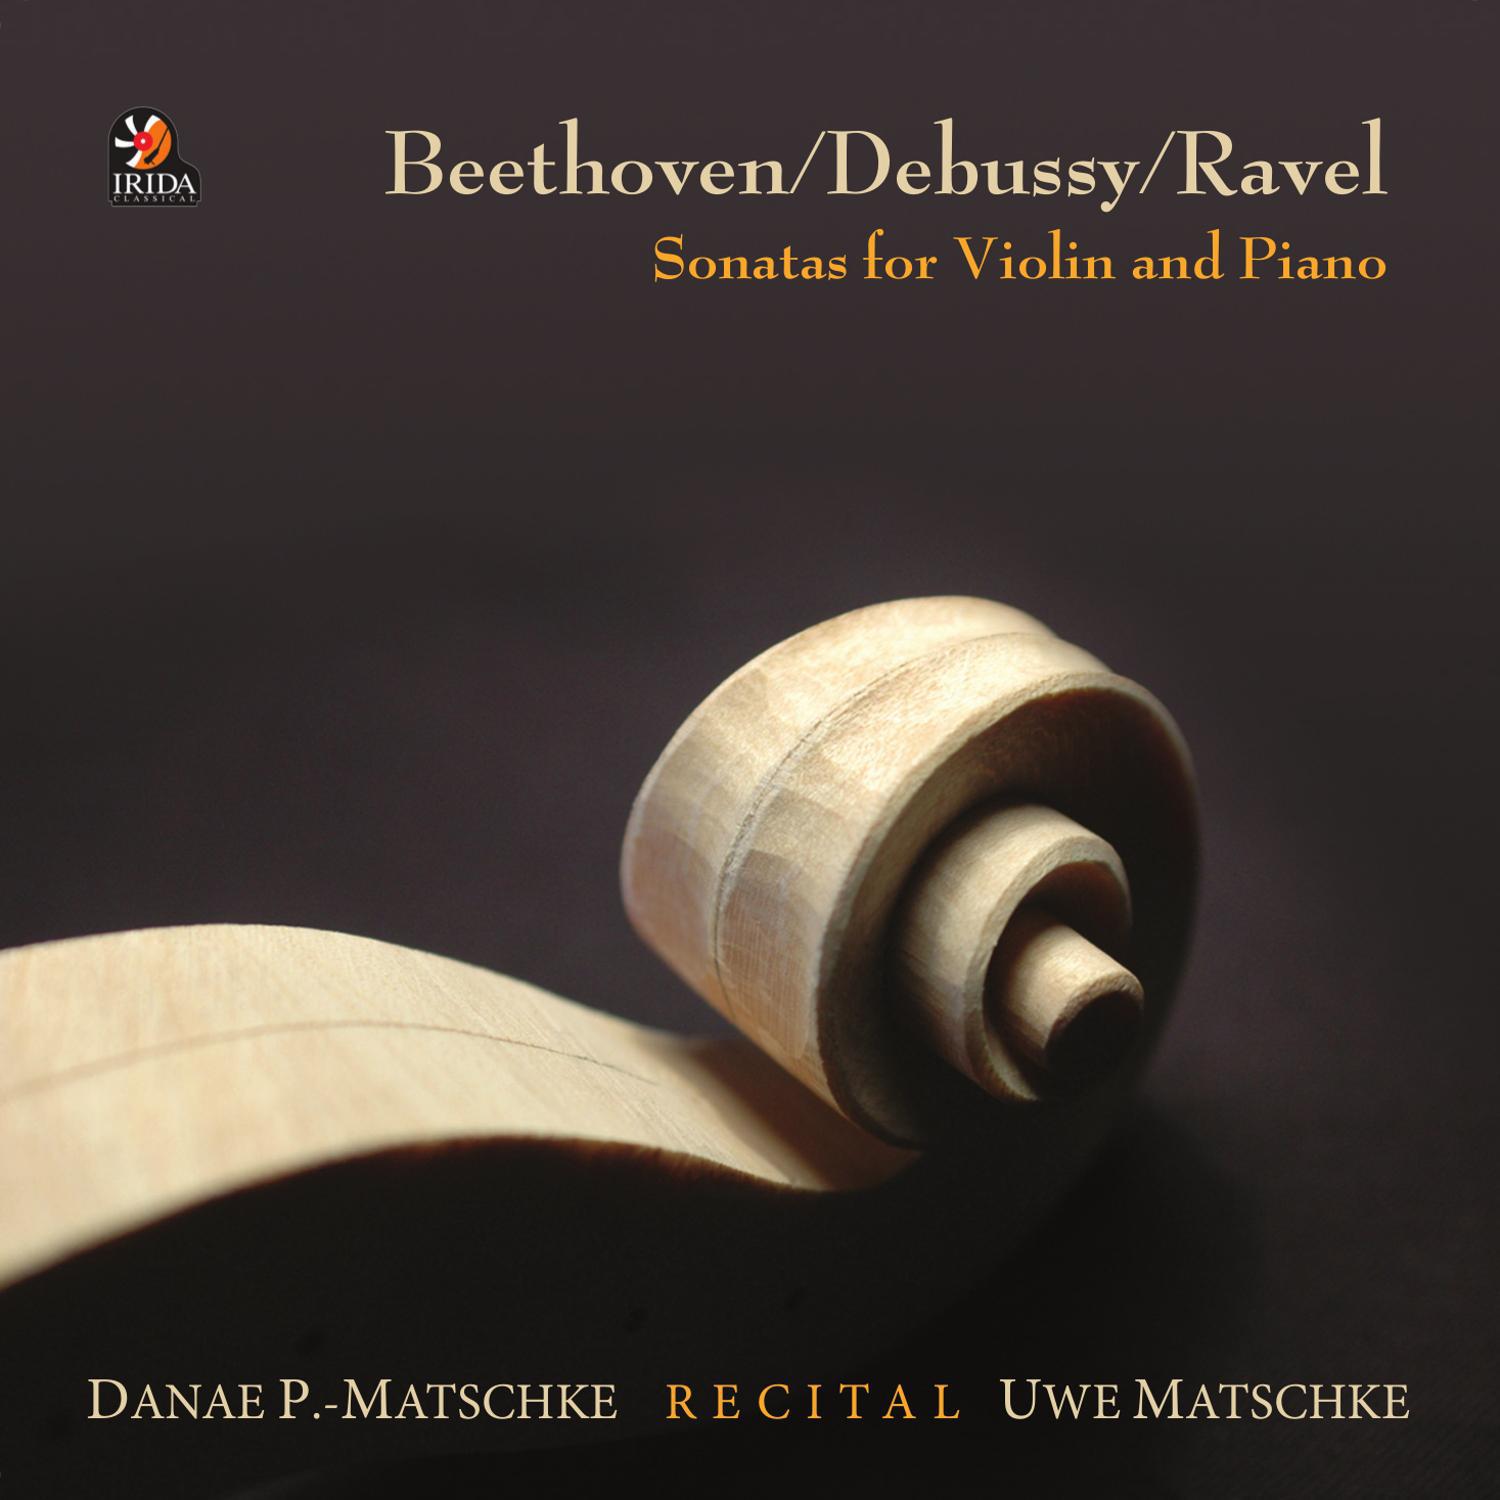 Beethoven - Debussy - Ravel: Recital, Sonatas for Violin and Piano